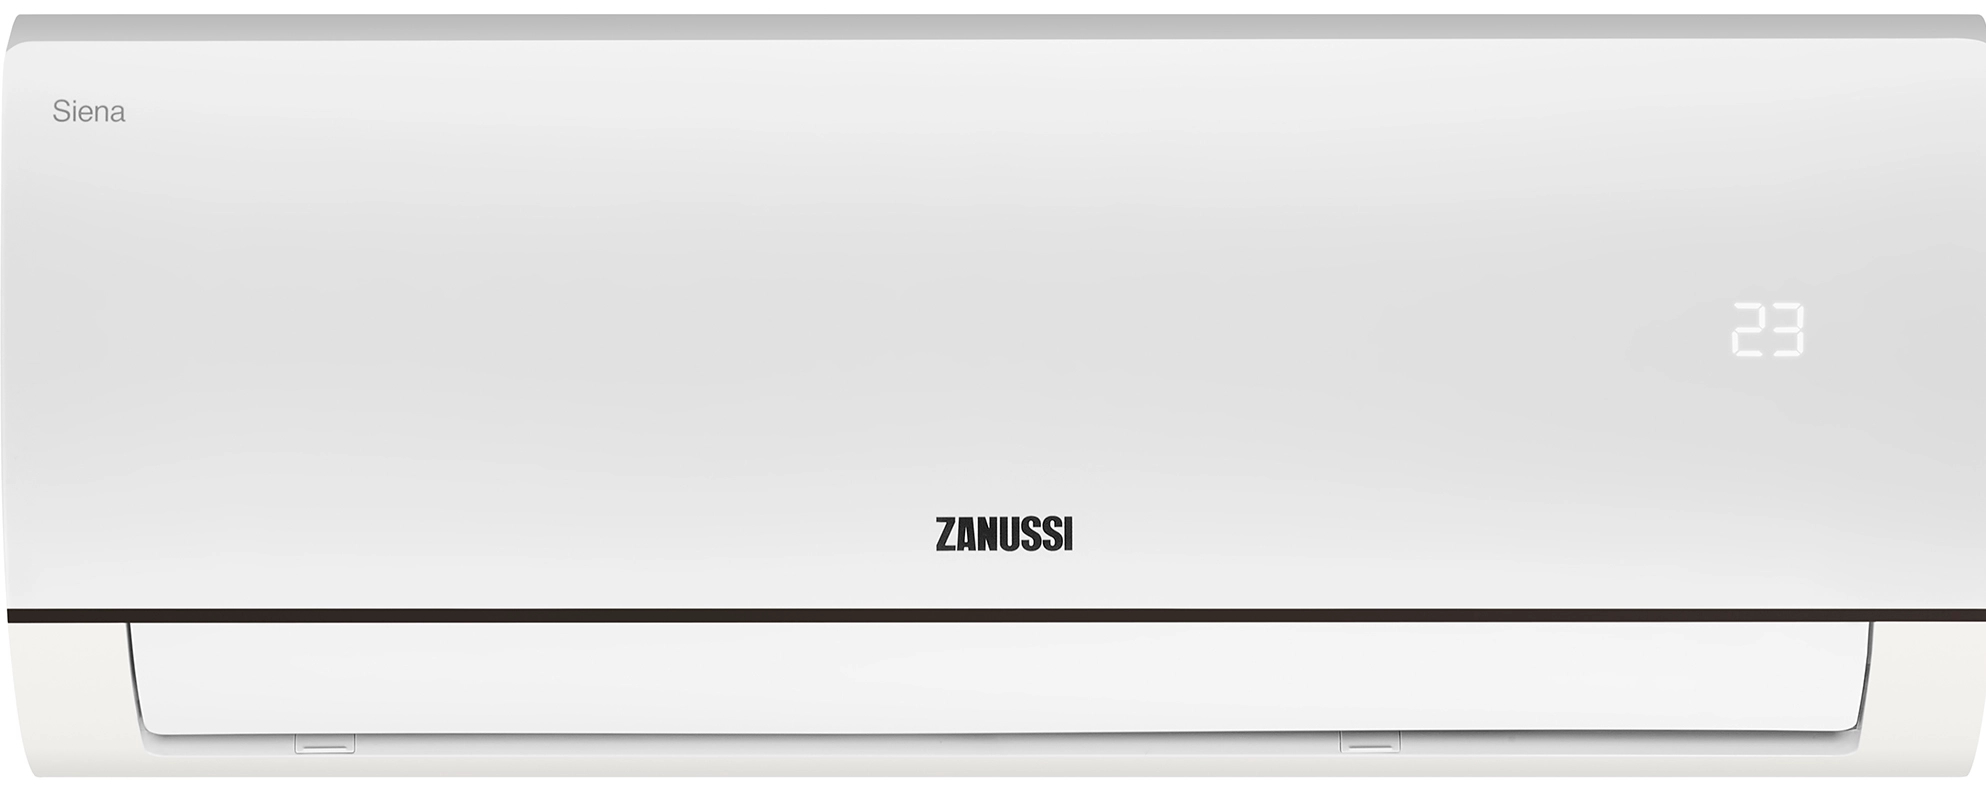 продаём Zanussi Siena ZACS-18 HS/A21/N1 в Украине - фото 4